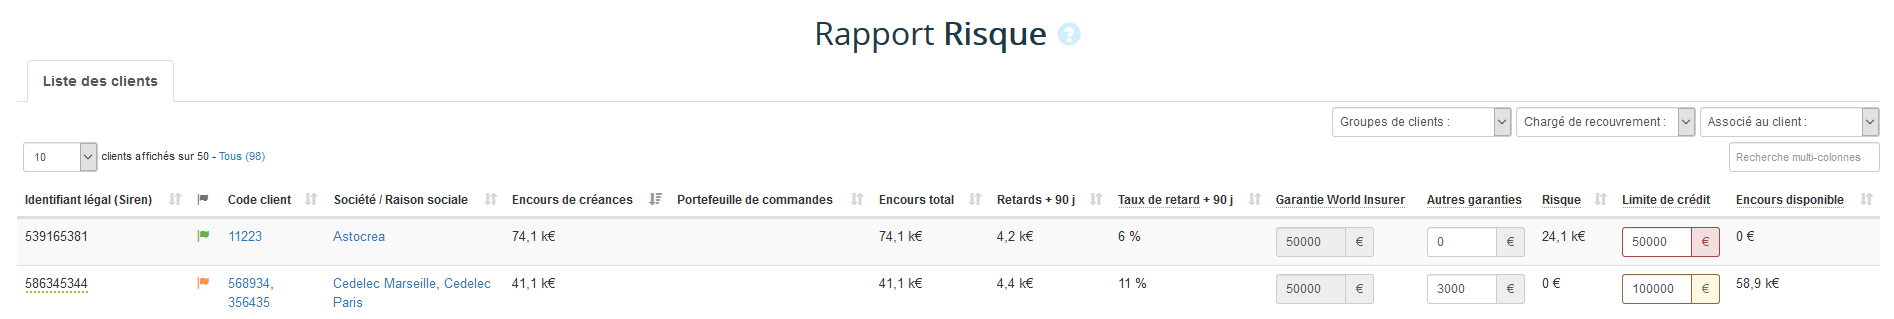 Rapport Risque